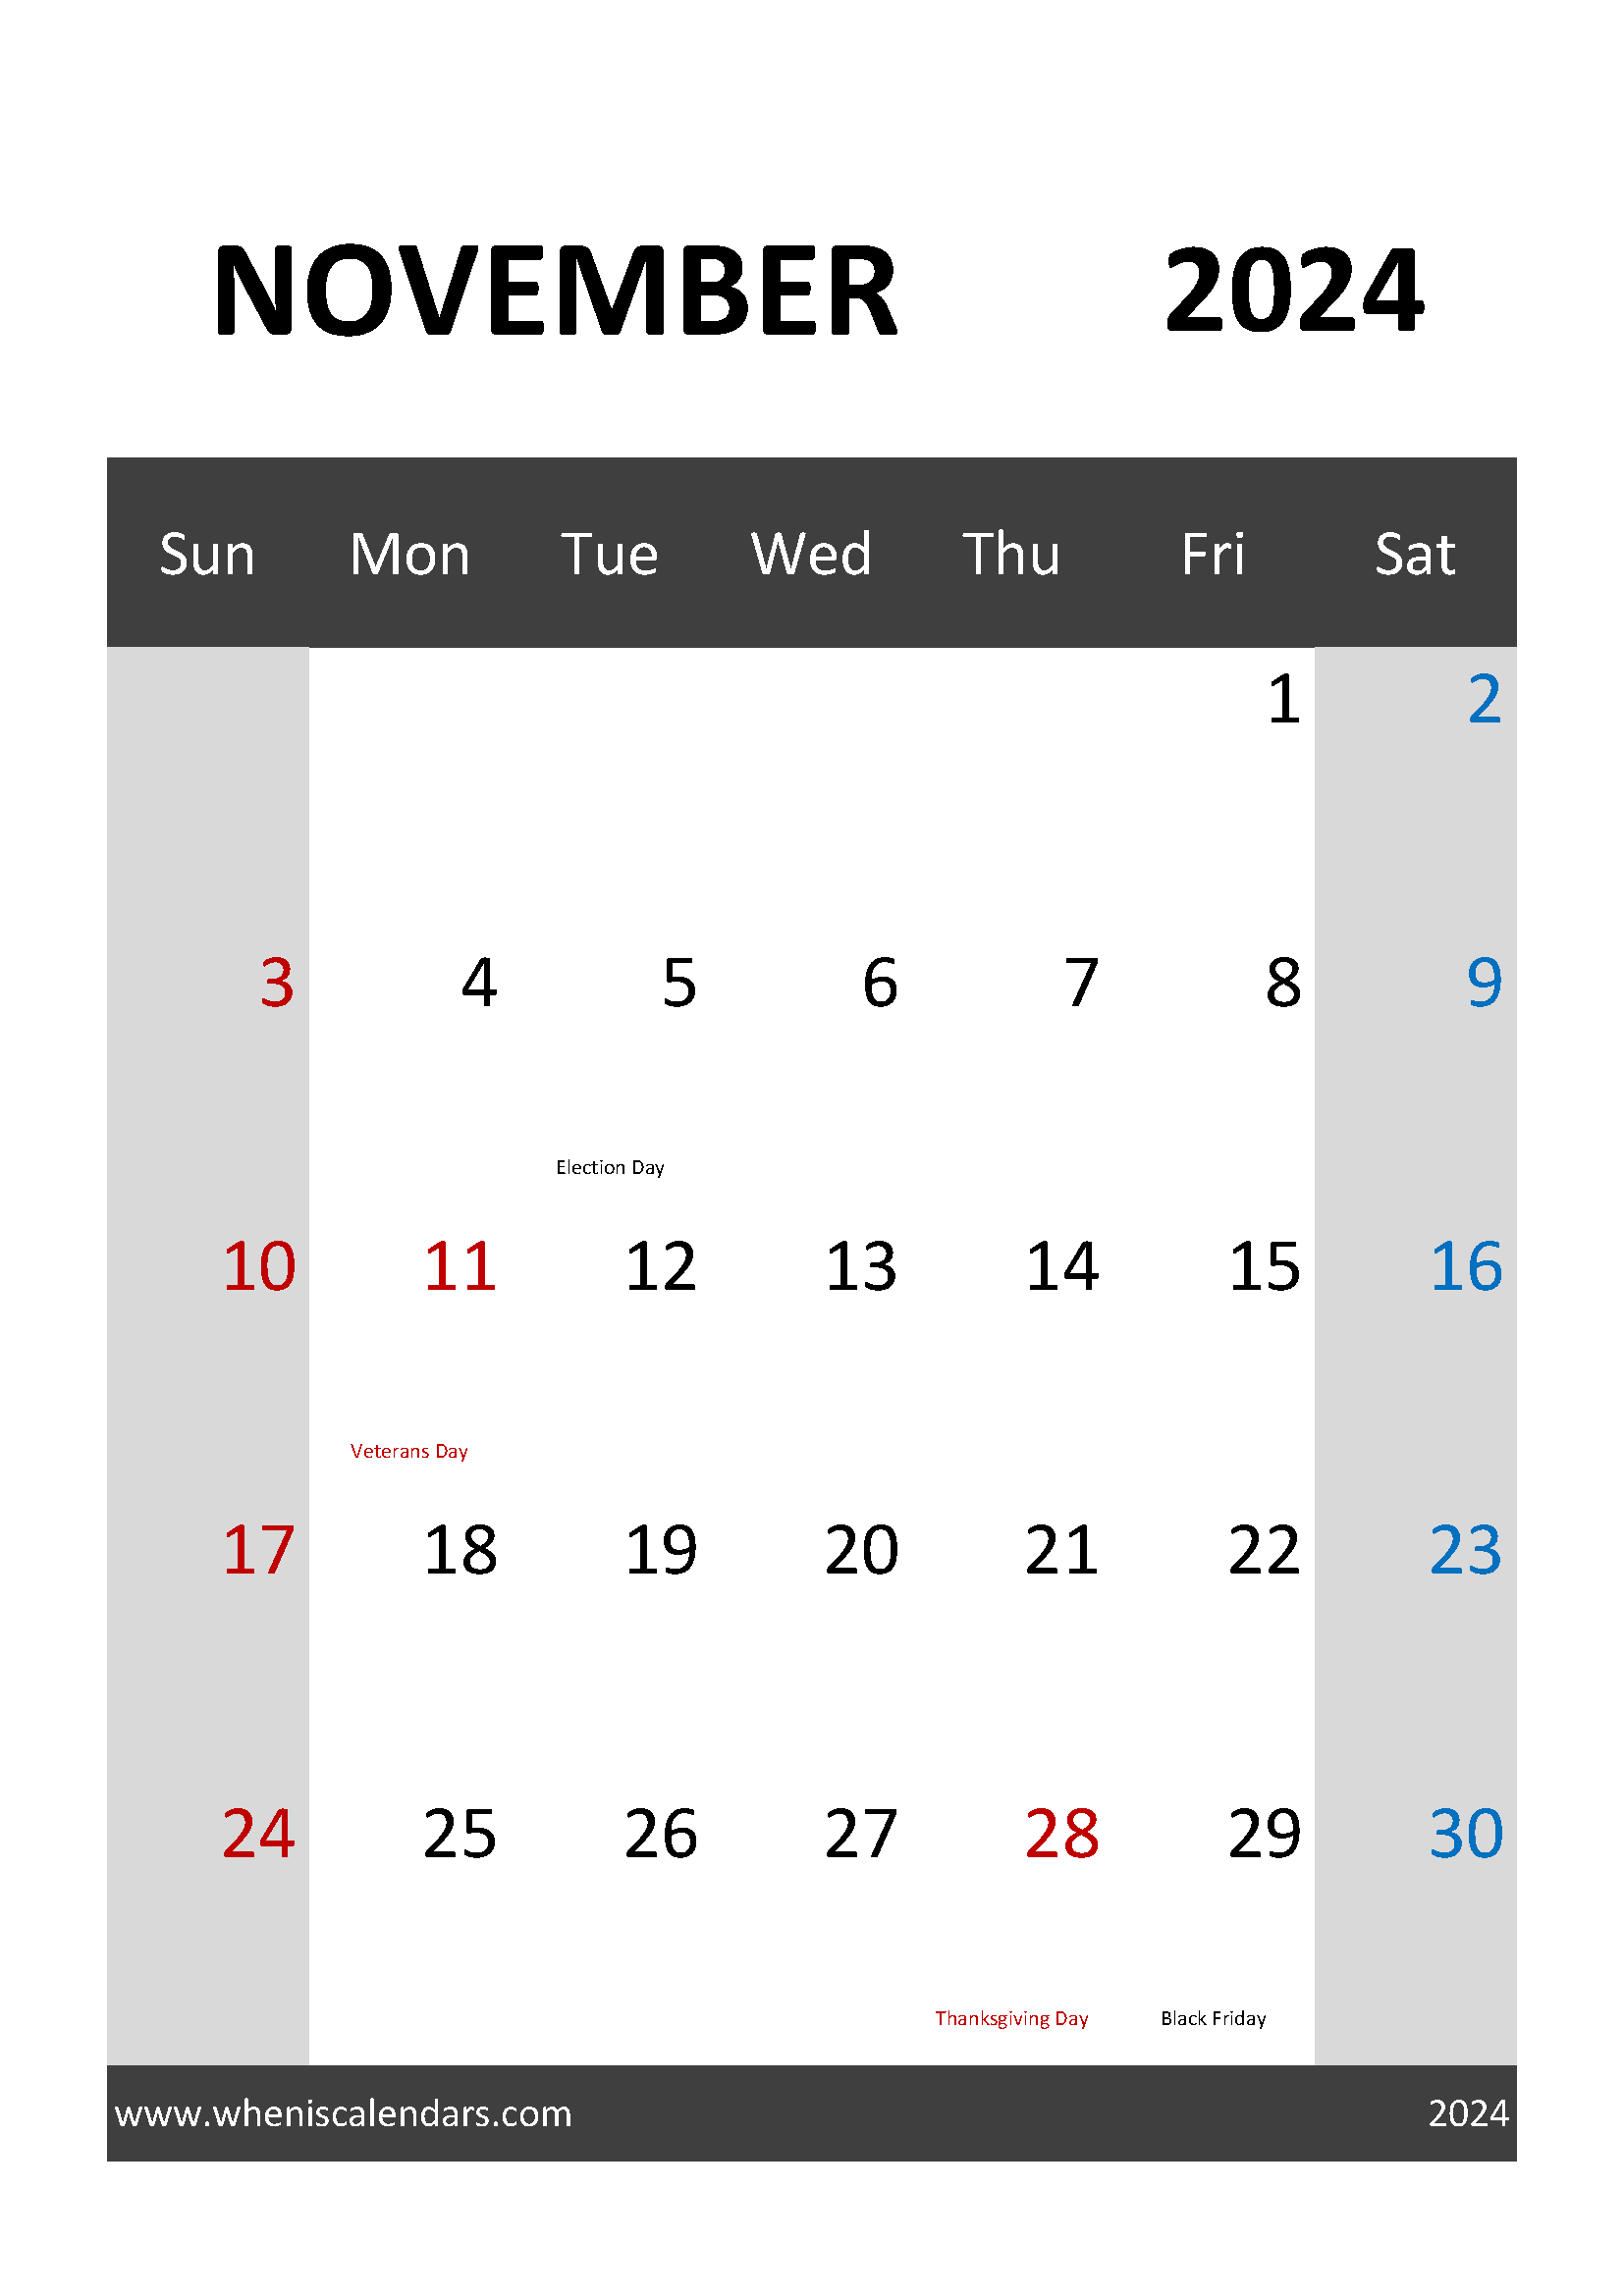 November 2024 Calendar planner Printable Monthly Calendar